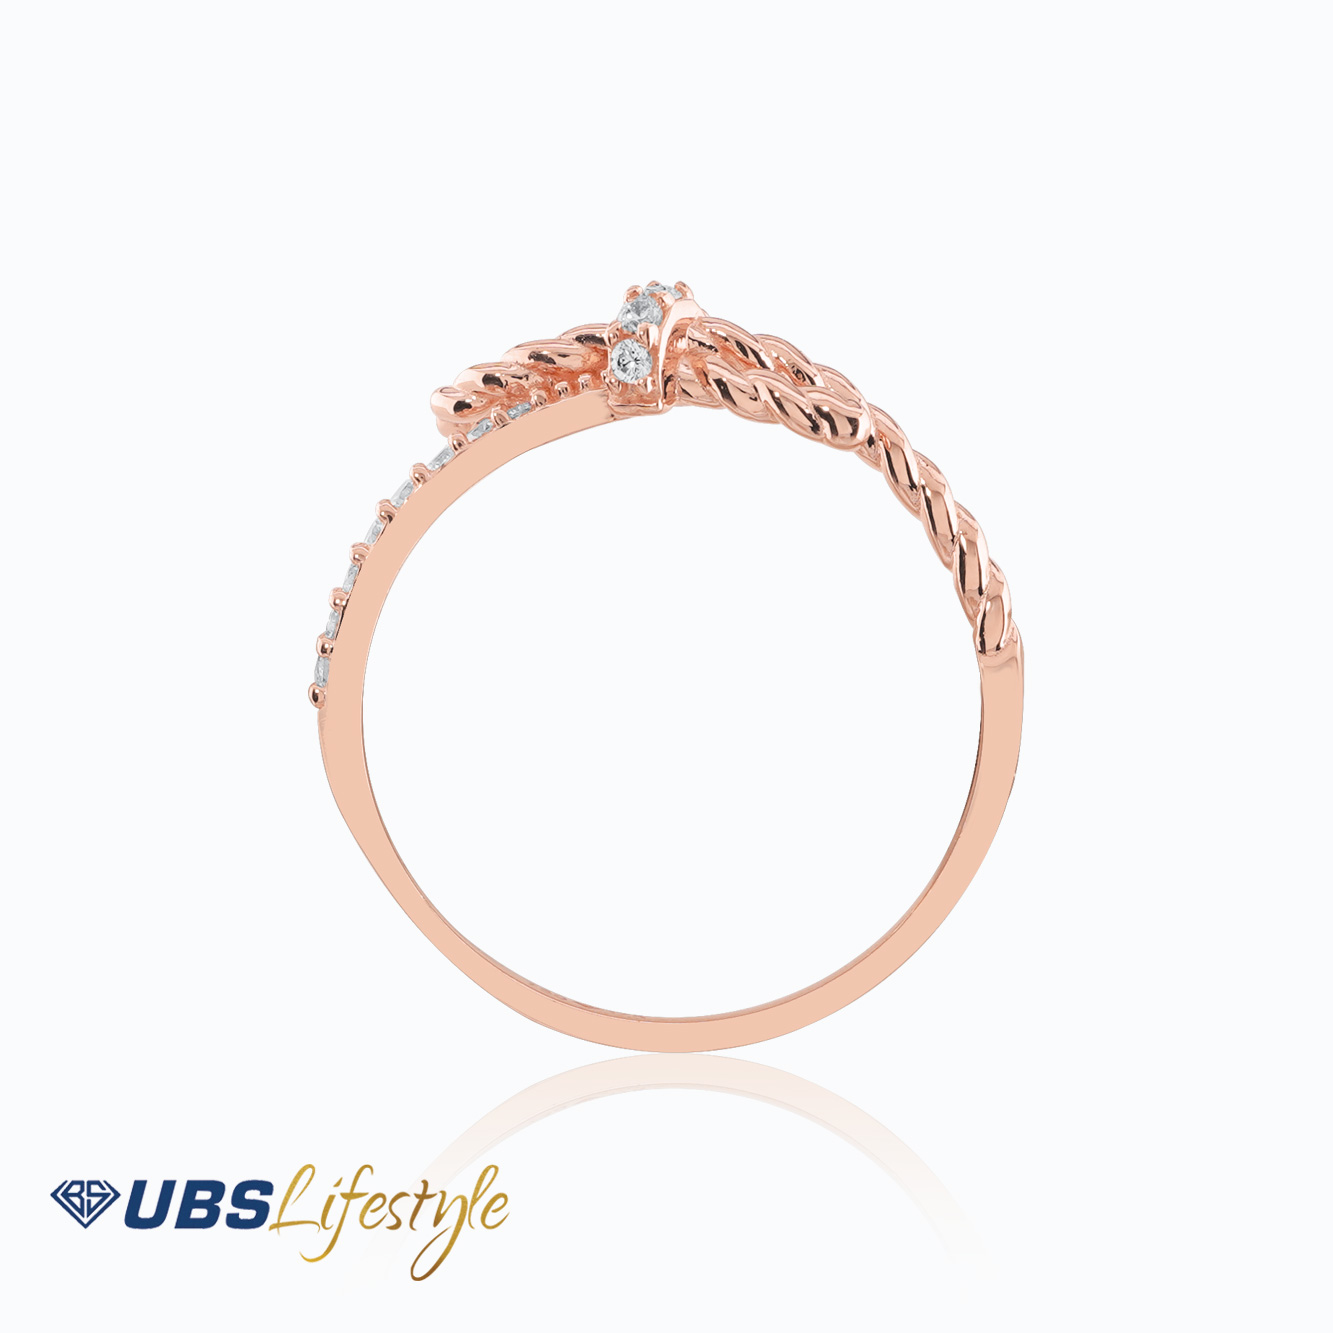 UBS Cincin Emas Knot - Ksc0857R - 17K